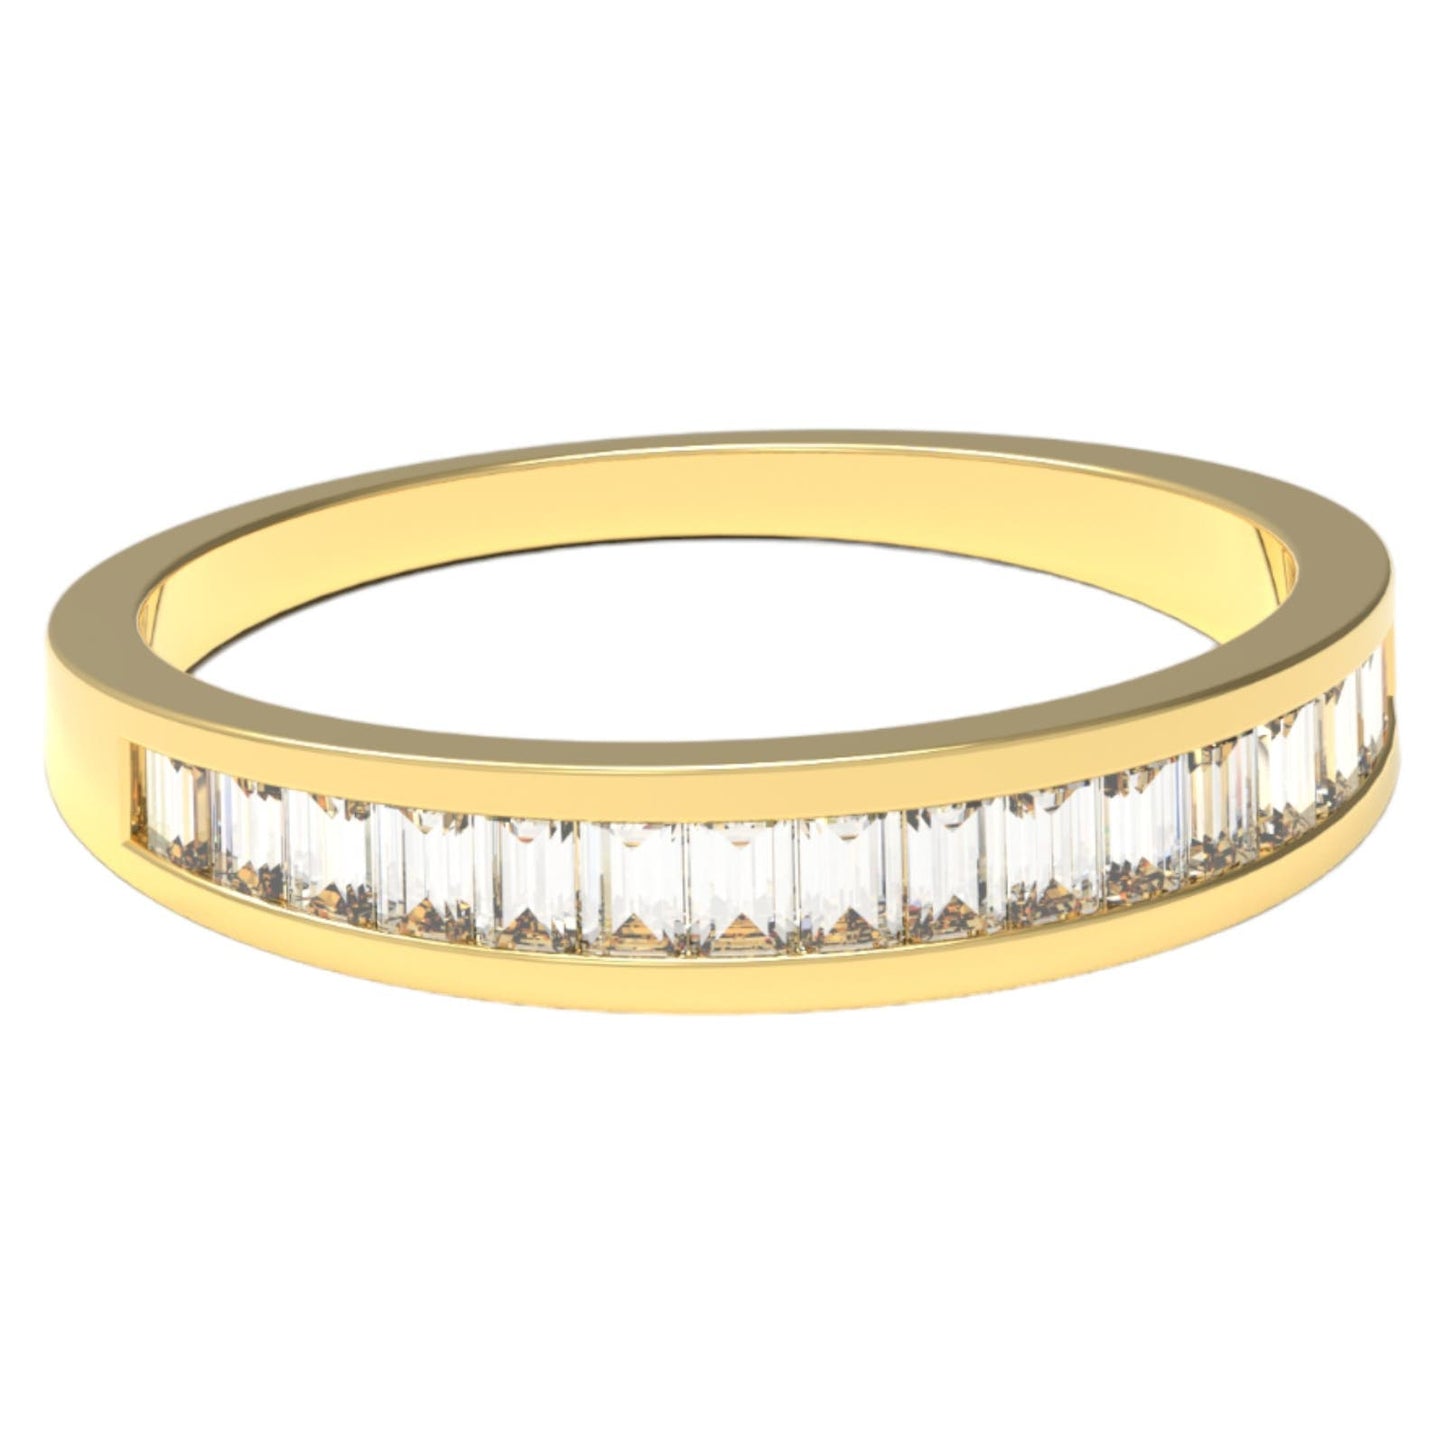 Elegant 14K Yellow Gold 0.50 Ct Baguette Diamond Ring, Size 6.5